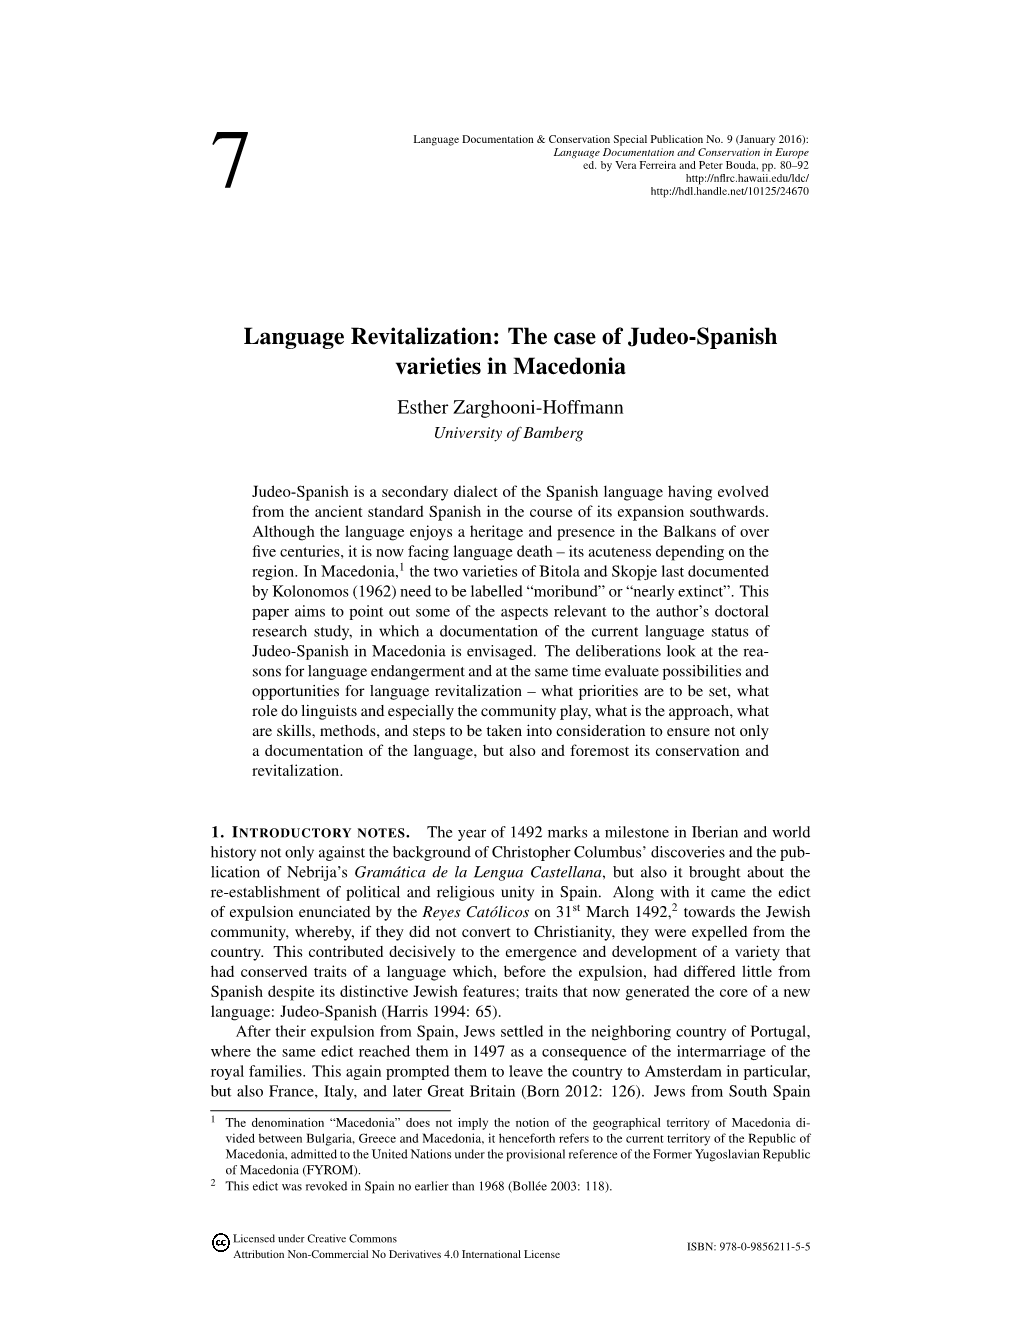 Language Revitalization: the Case of Judeo-Spanish Varieties in Macedonia Esther Zarghooni-Hoffmann University of Bamberg